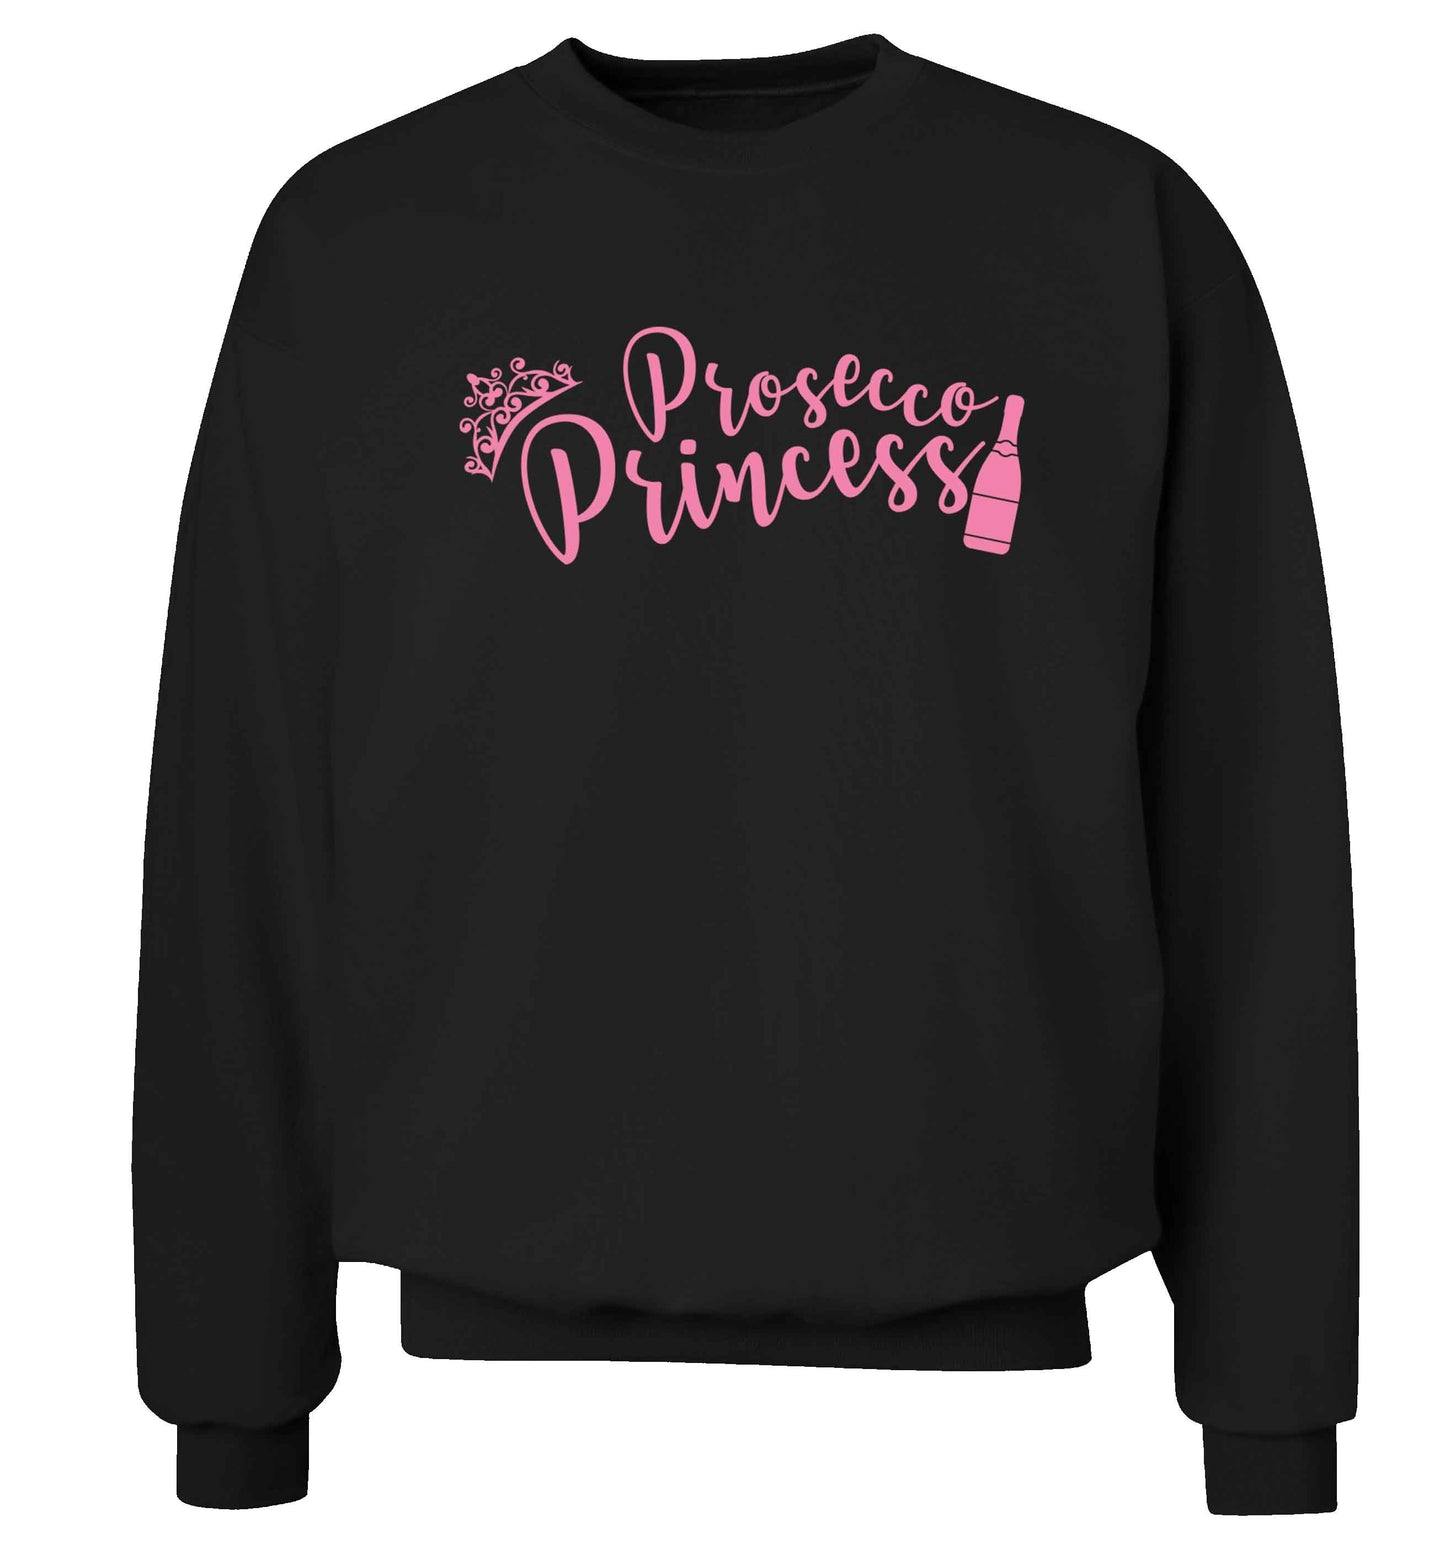 Prosecco princess Adult's unisex black Sweater 2XL